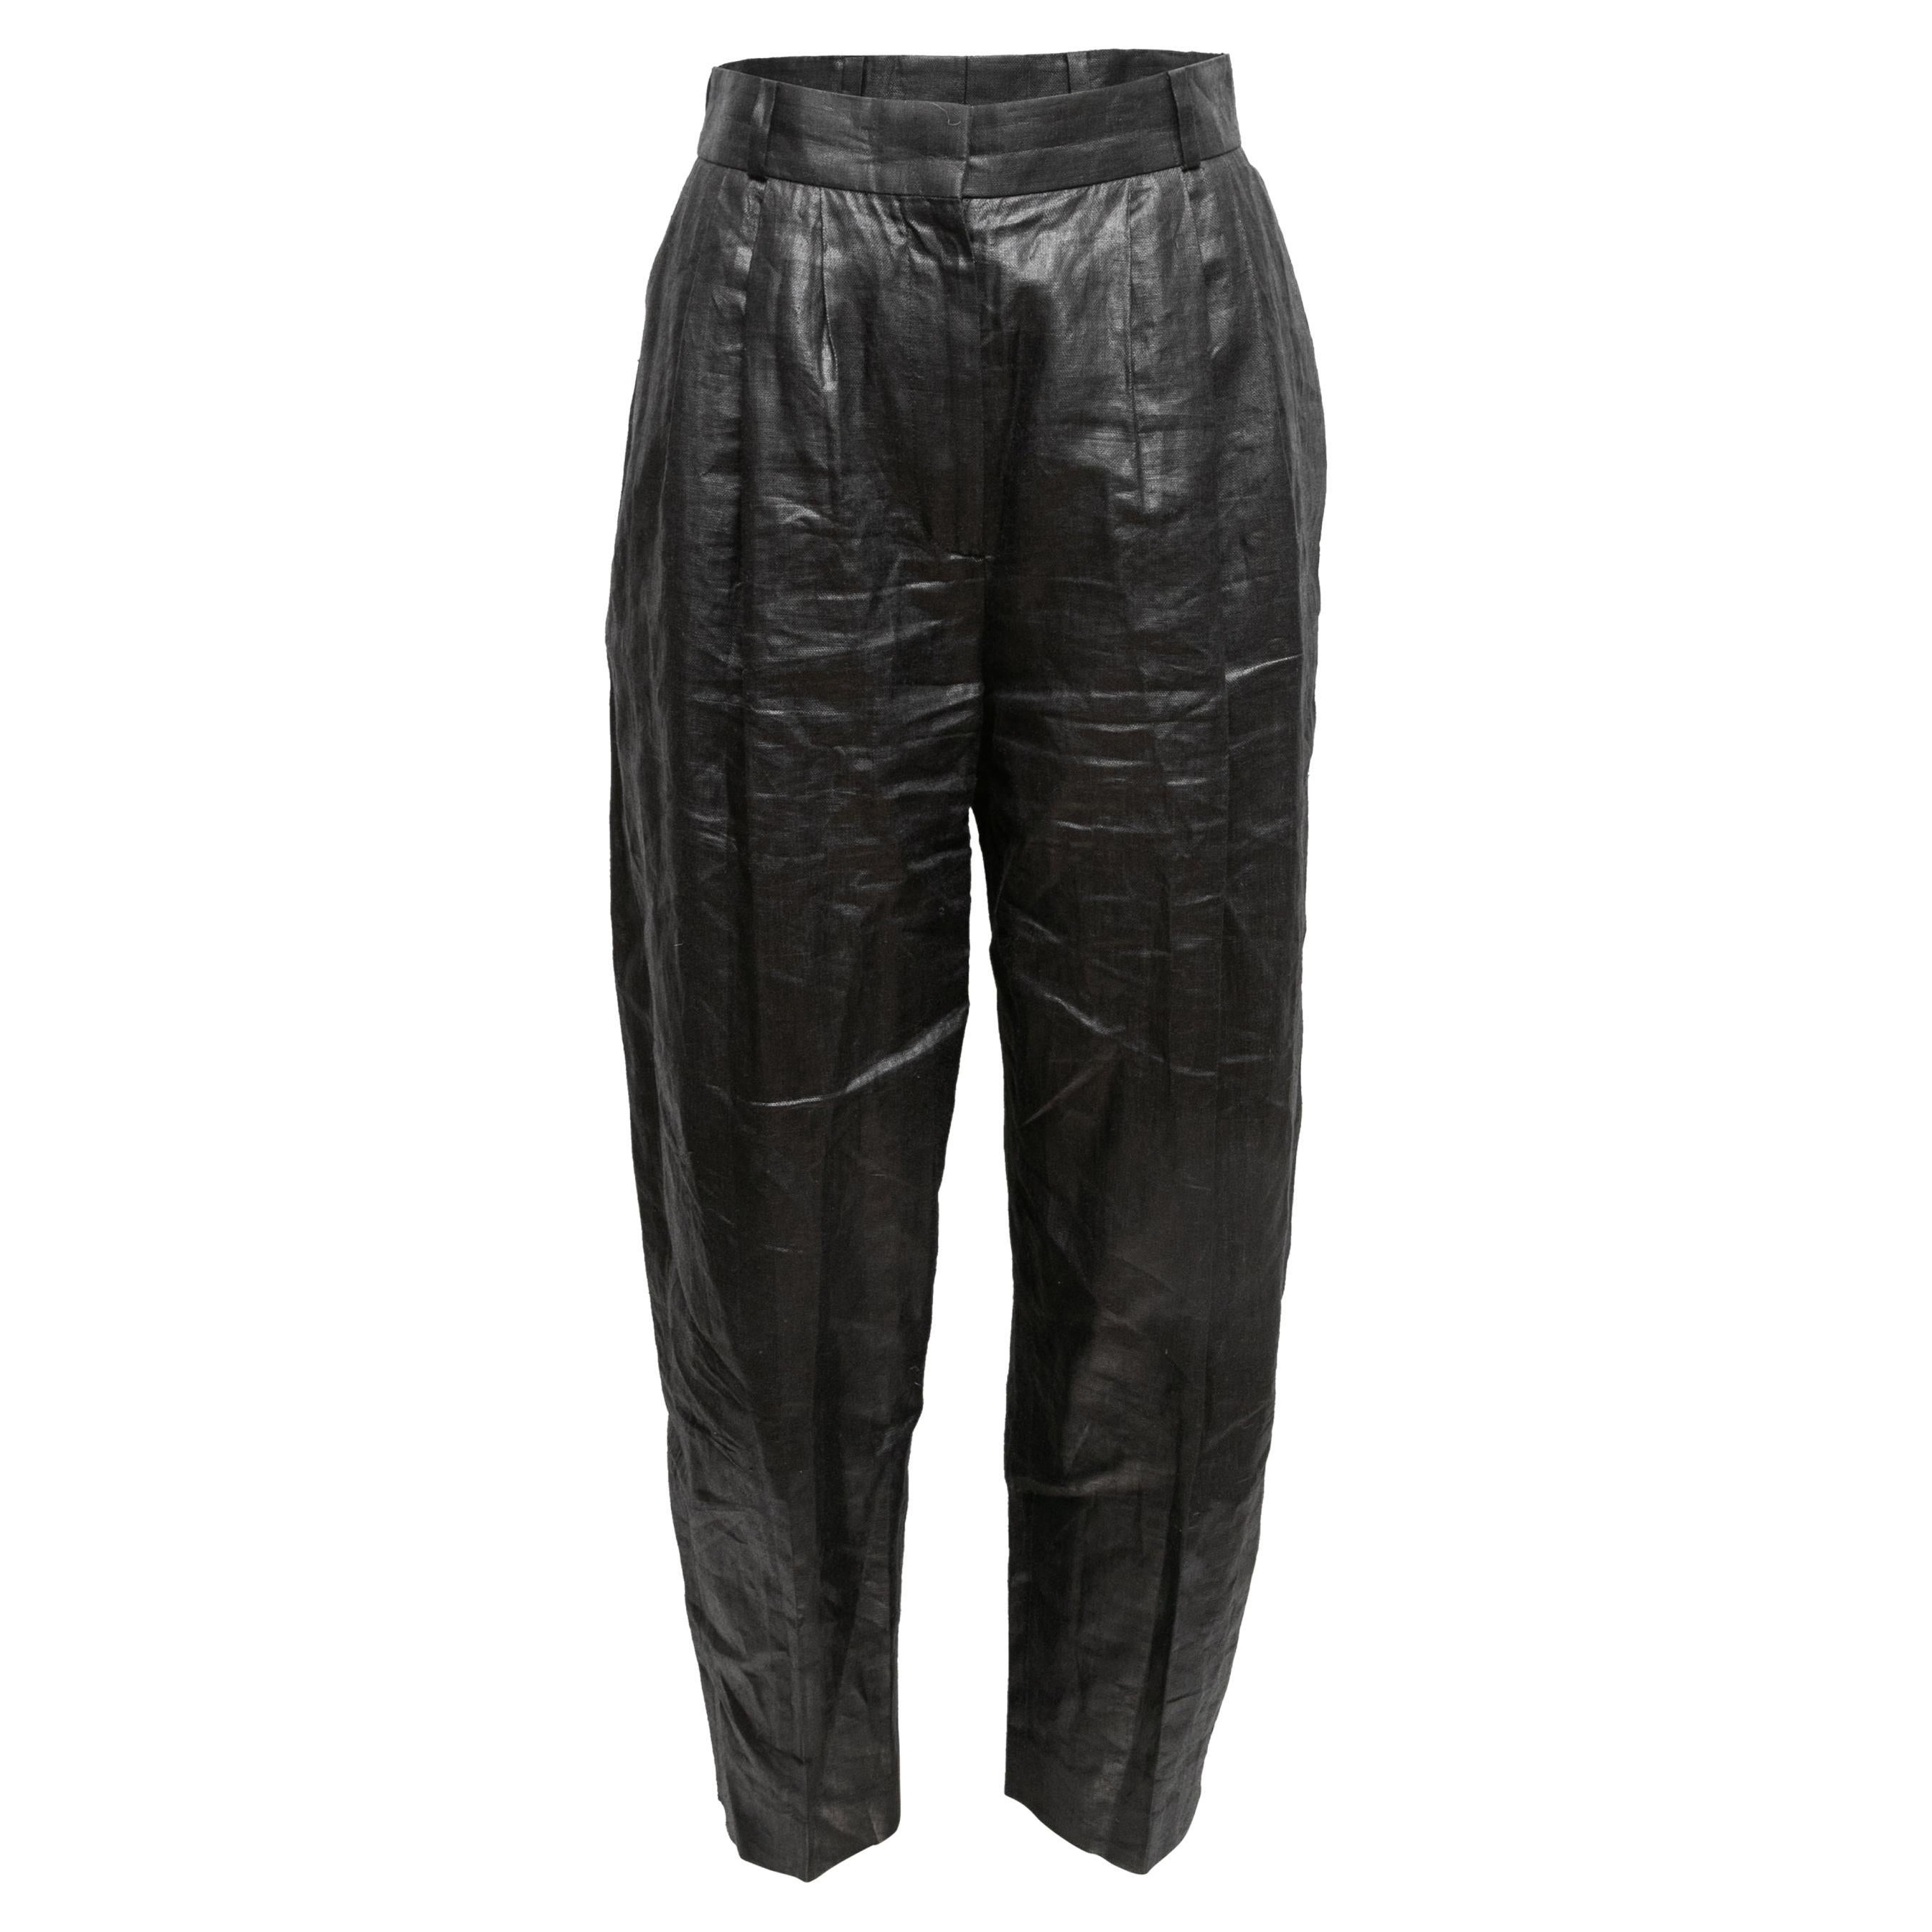 Black Alexander McQueen Waxed Linen Pants Size EU 42